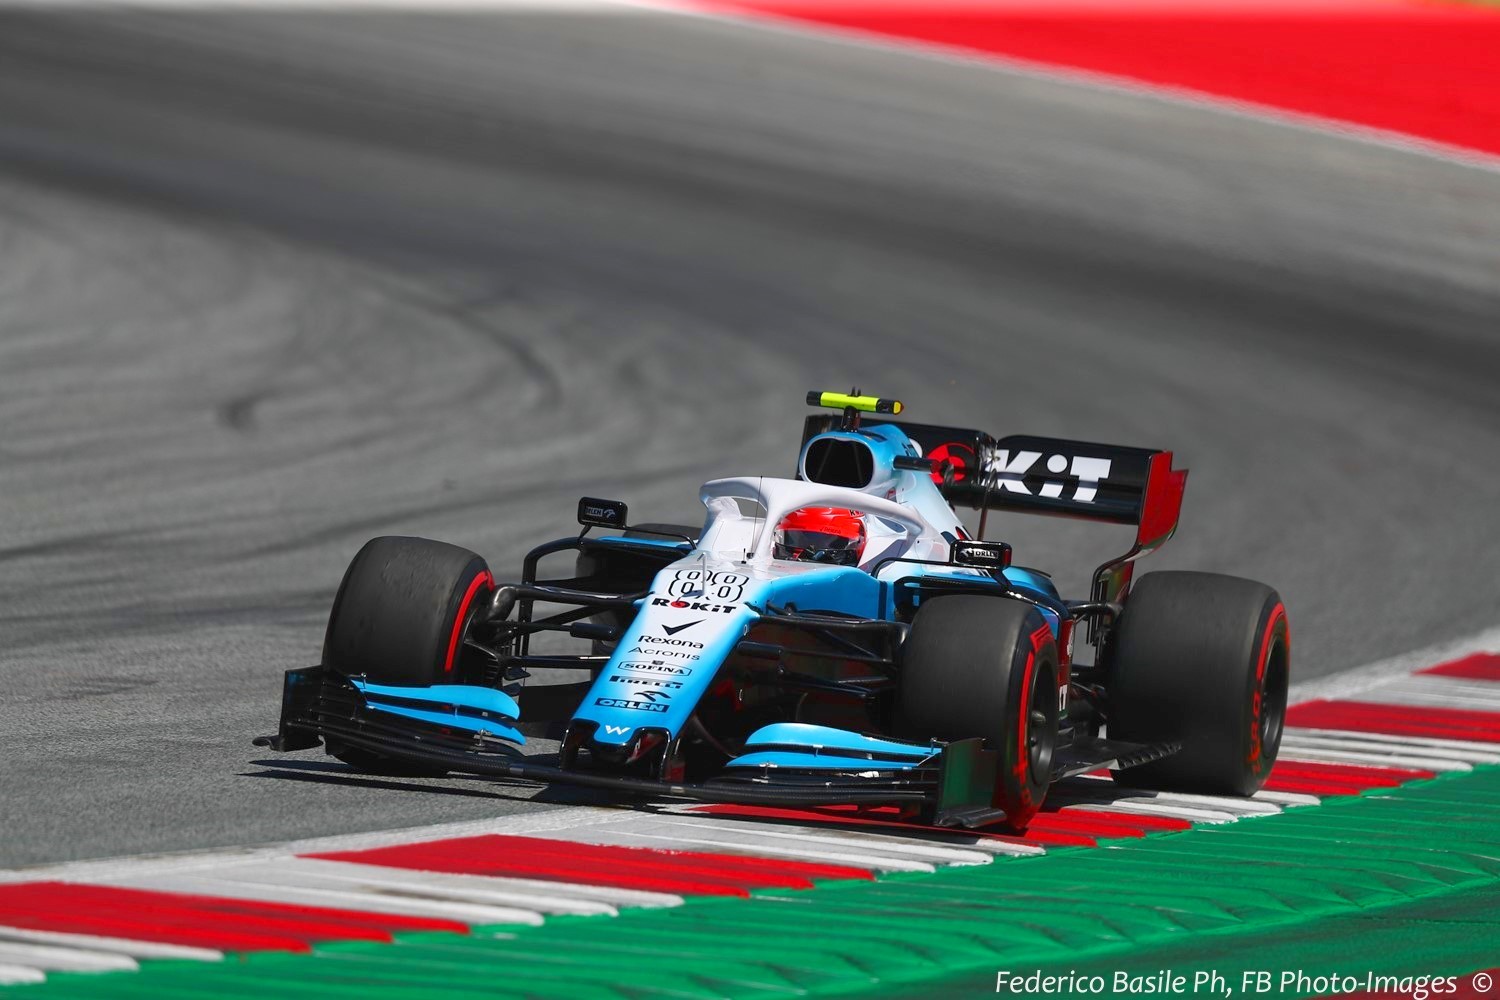 Kubica in the Williams in Austria